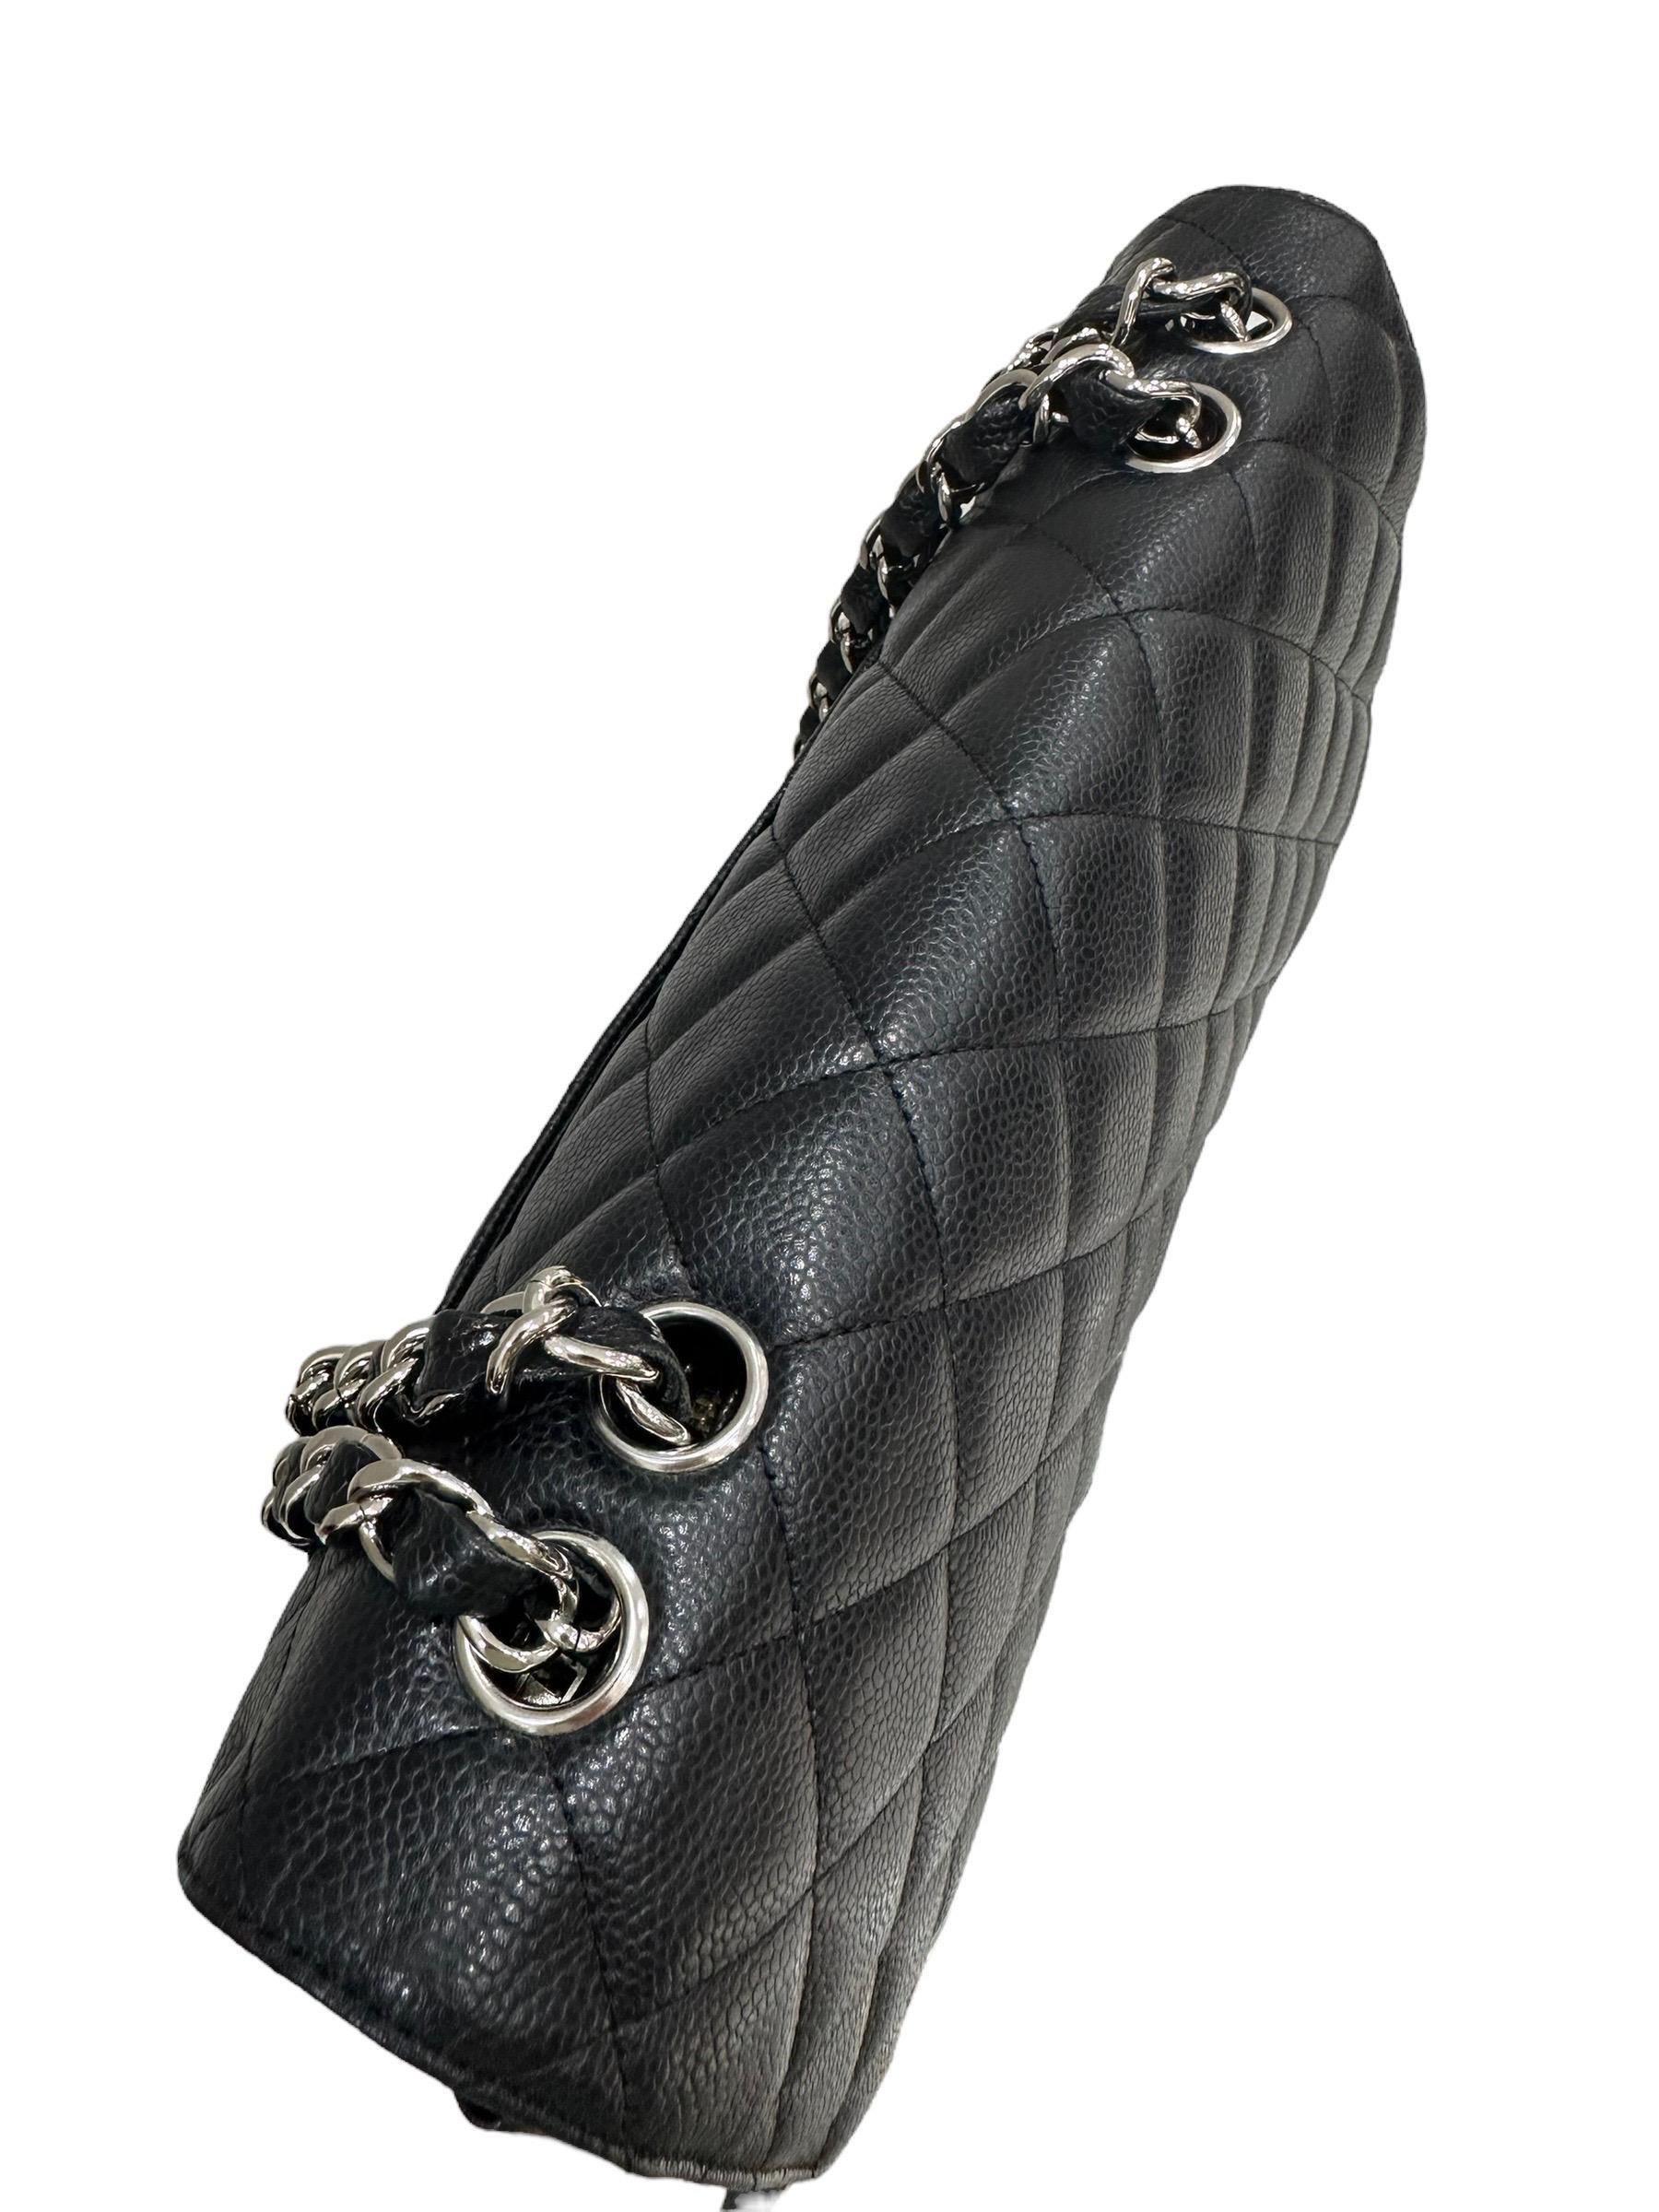 2009 Chanel Jumbo Black Caviar Leather Top Shoulder Bag  For Sale 2